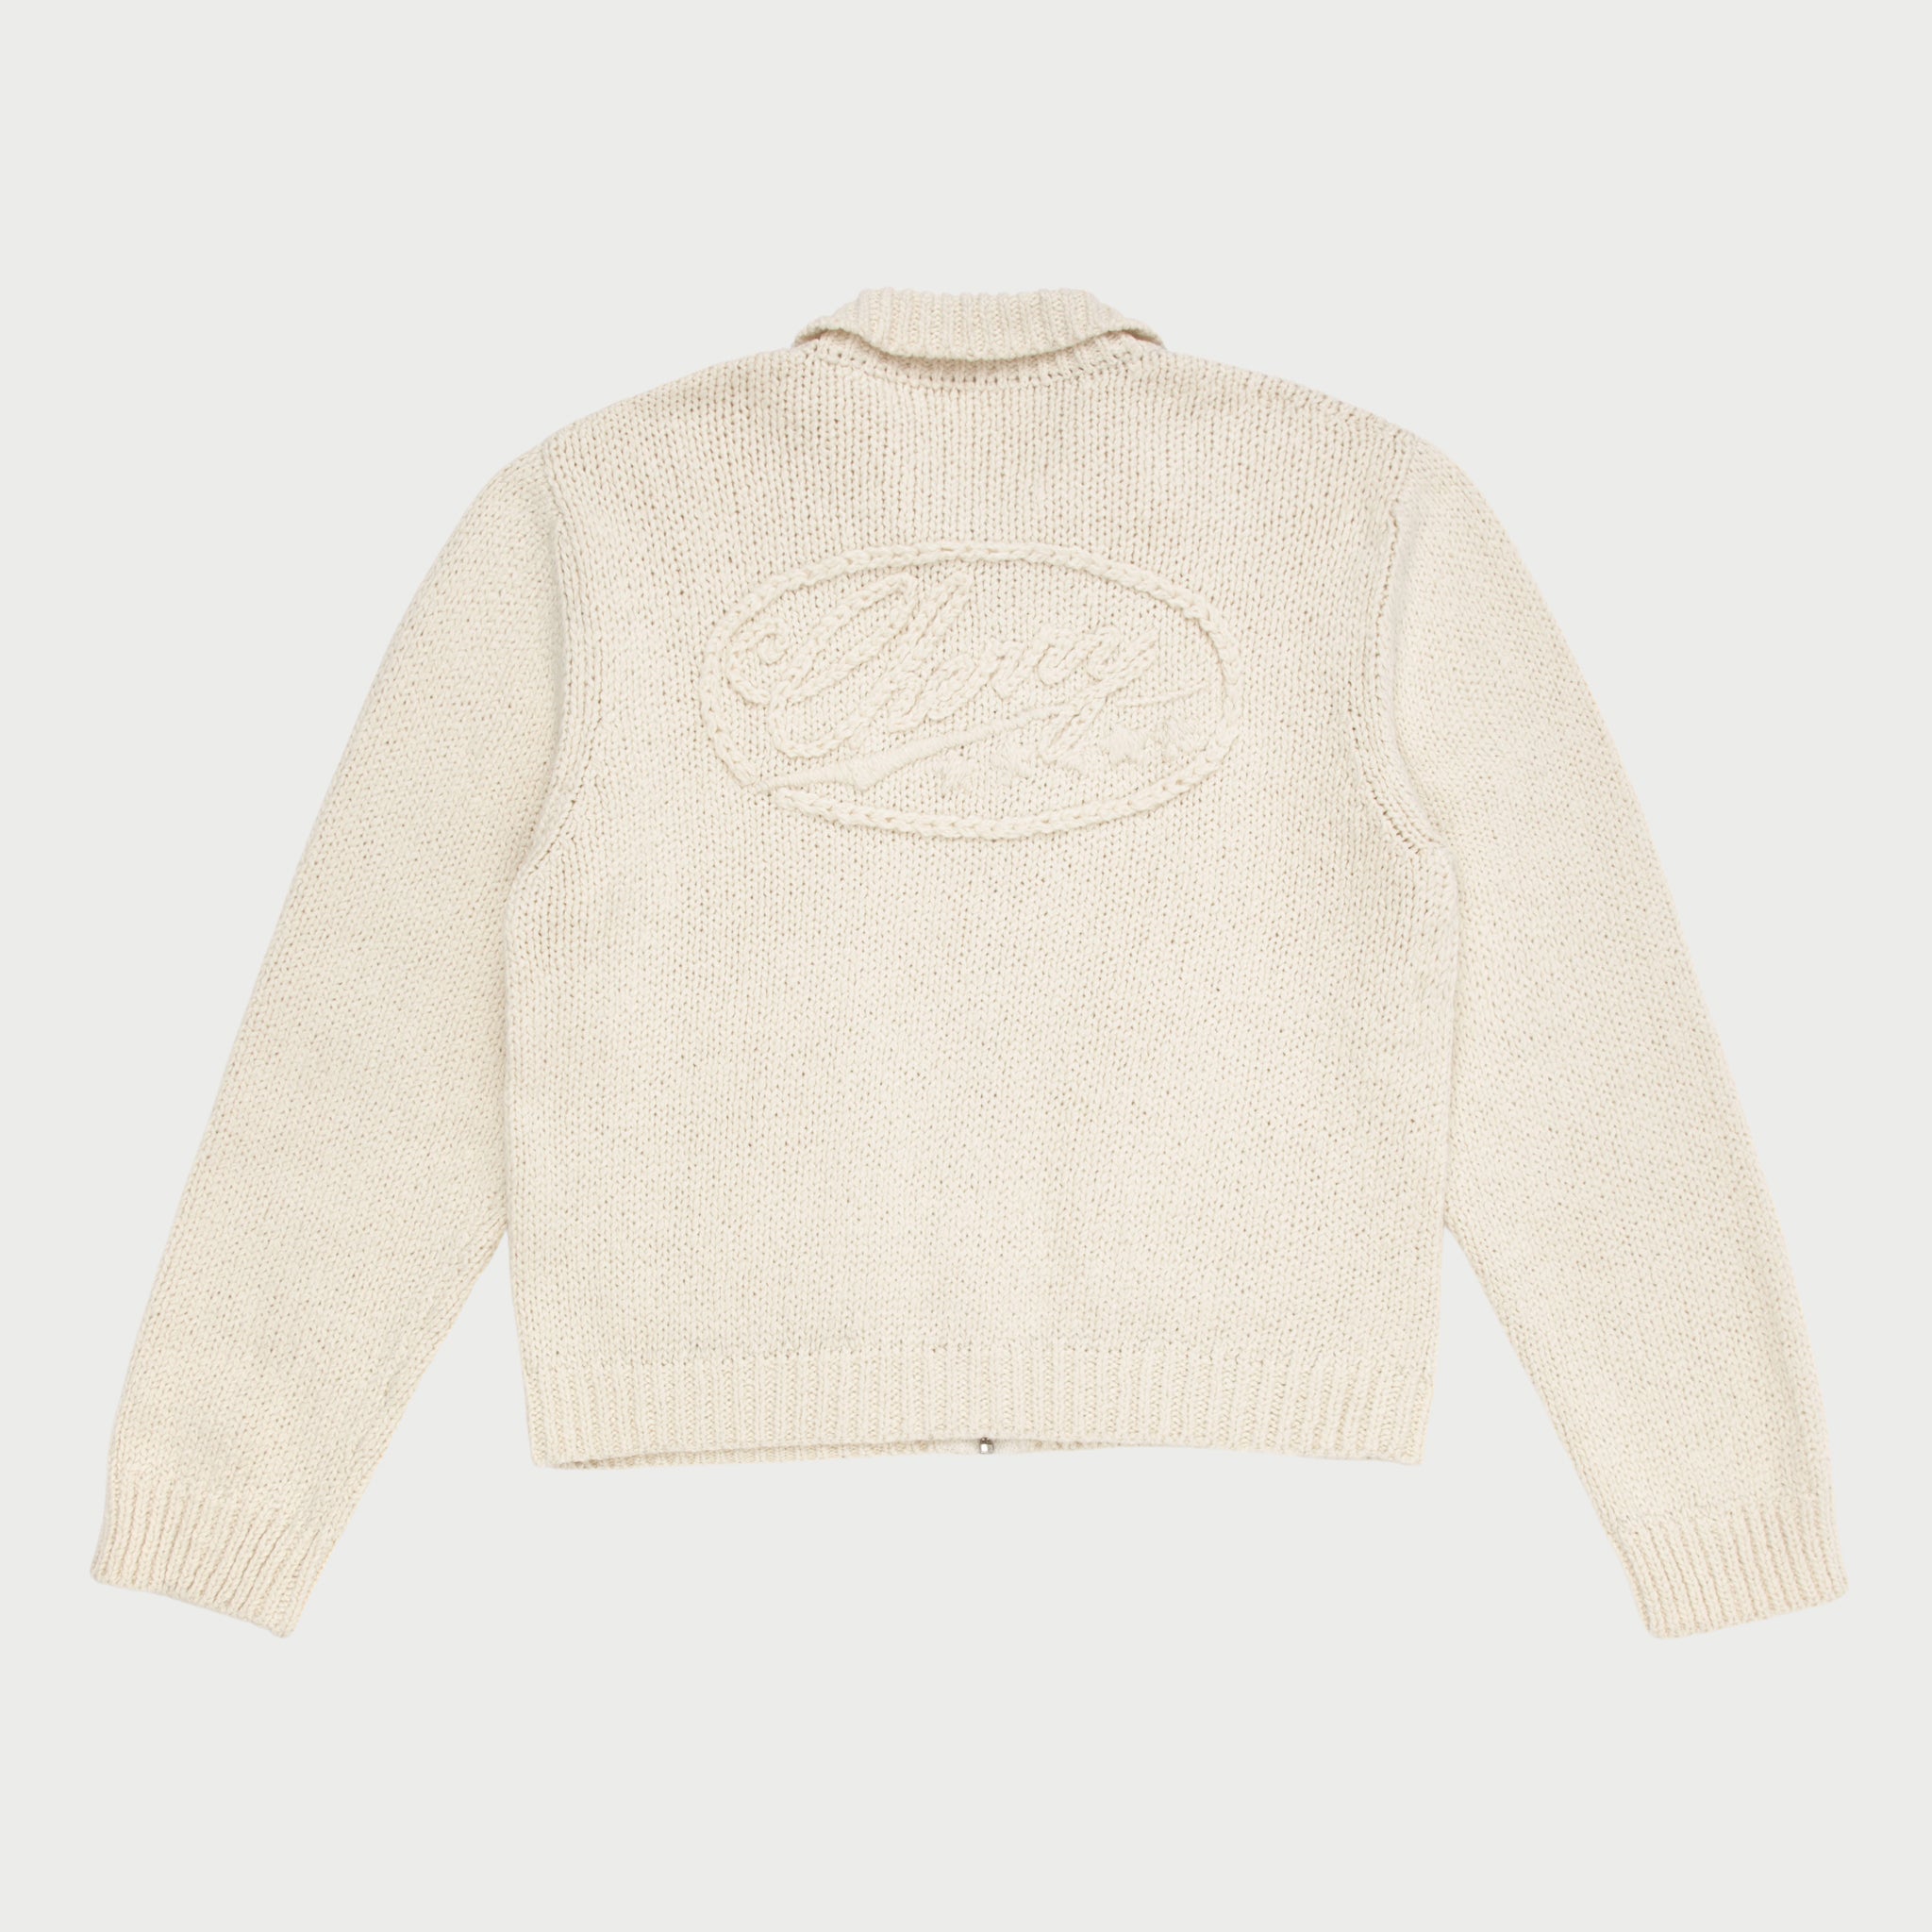 Cotton Knit Club Jacket (Cream)